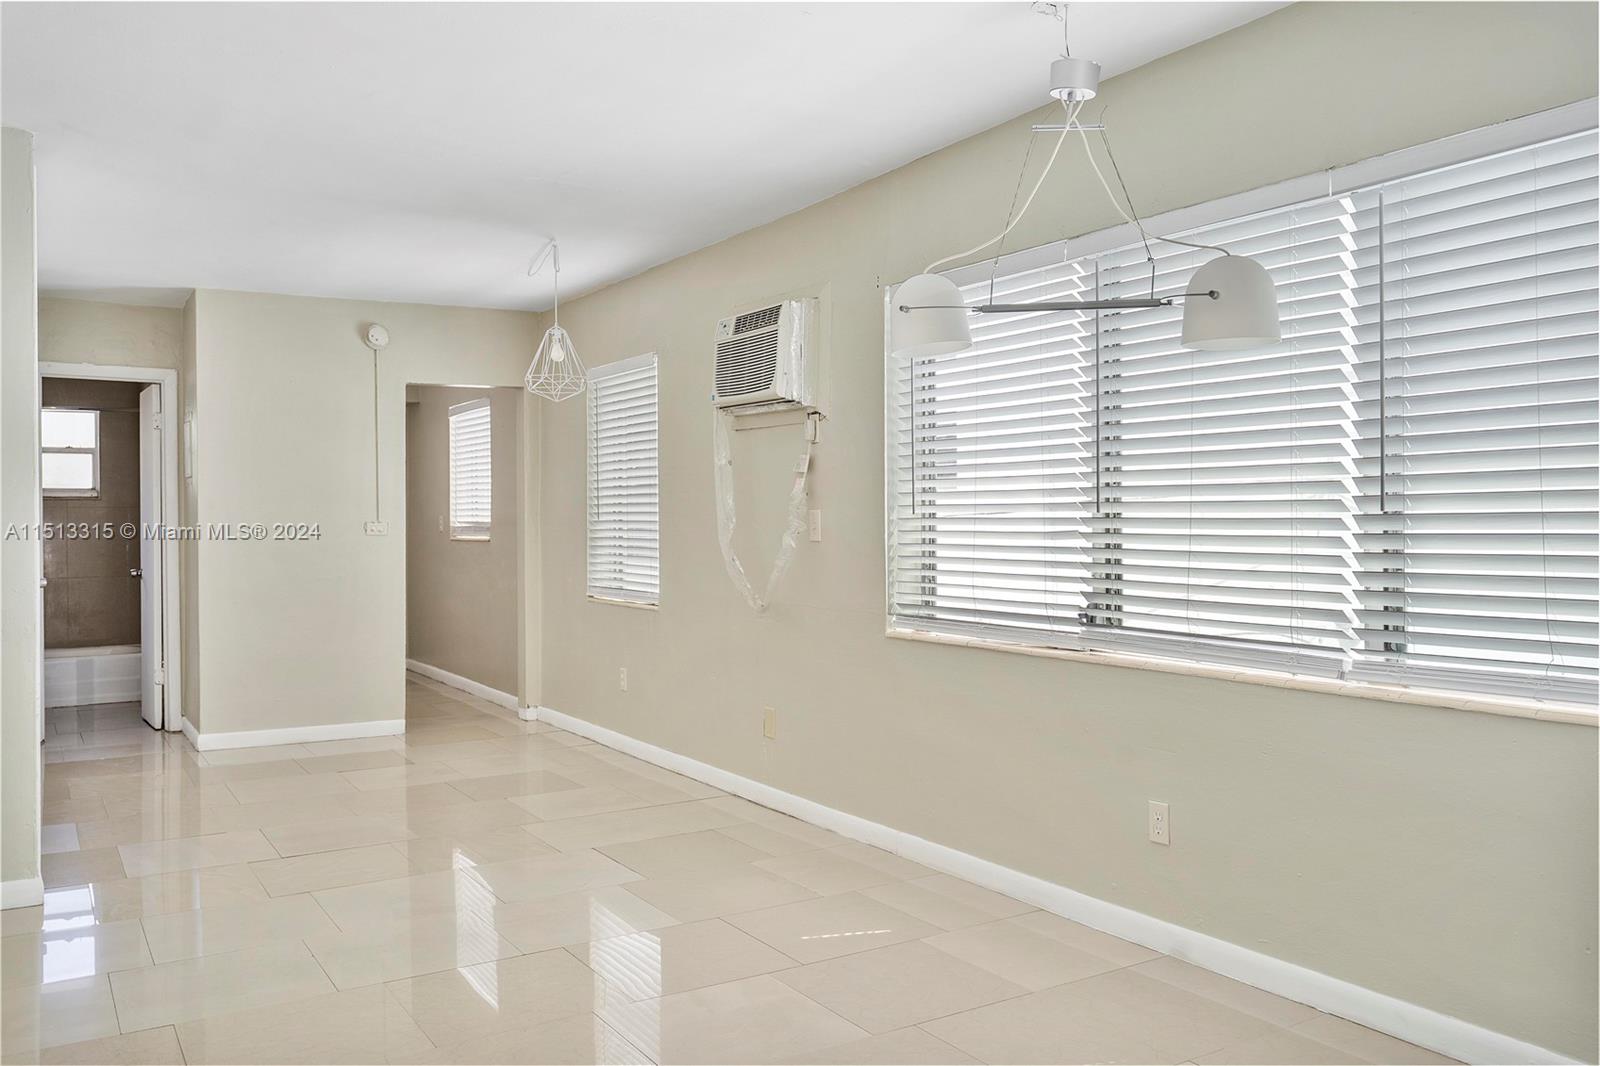 Rental Property at 1685 Jefferson Ave 06, Miami Beach, Miami-Dade County, Florida - Bathrooms: 1  - $1,950 MO.